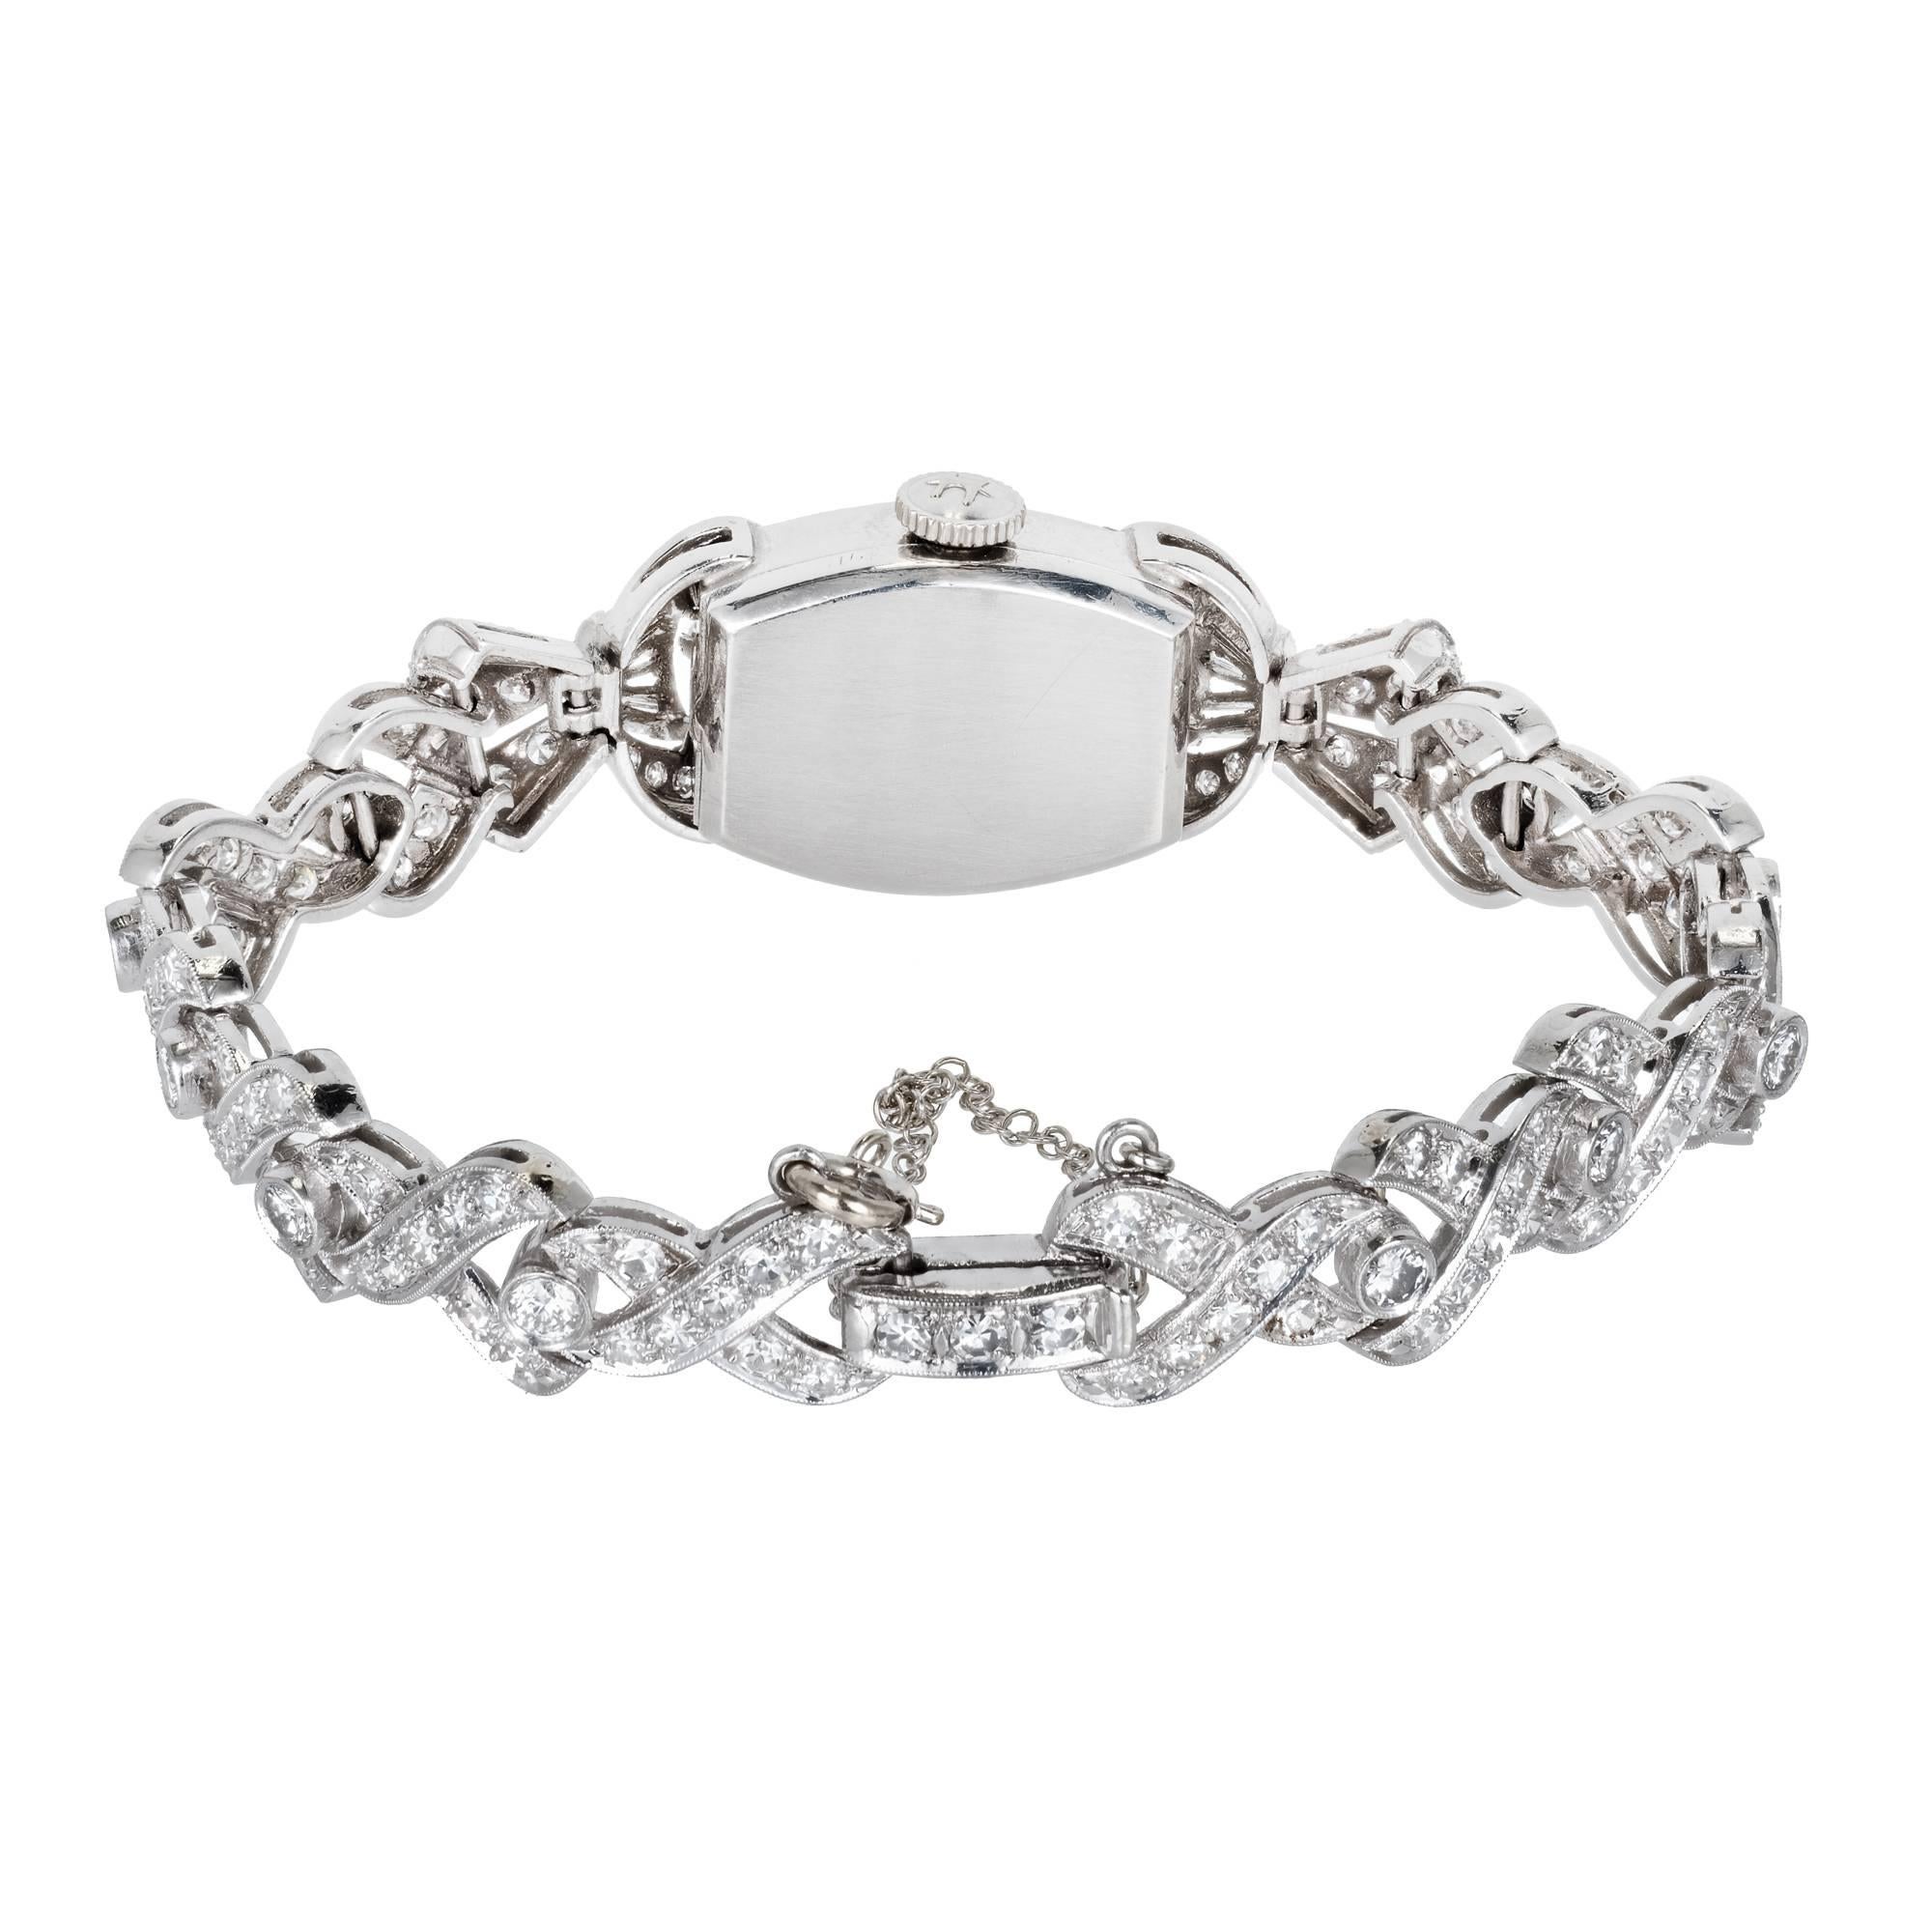 Women's Tiffany & Co. Hamilton Ladies Platinum Diamond Bracelet Wristwatch, circa 1940